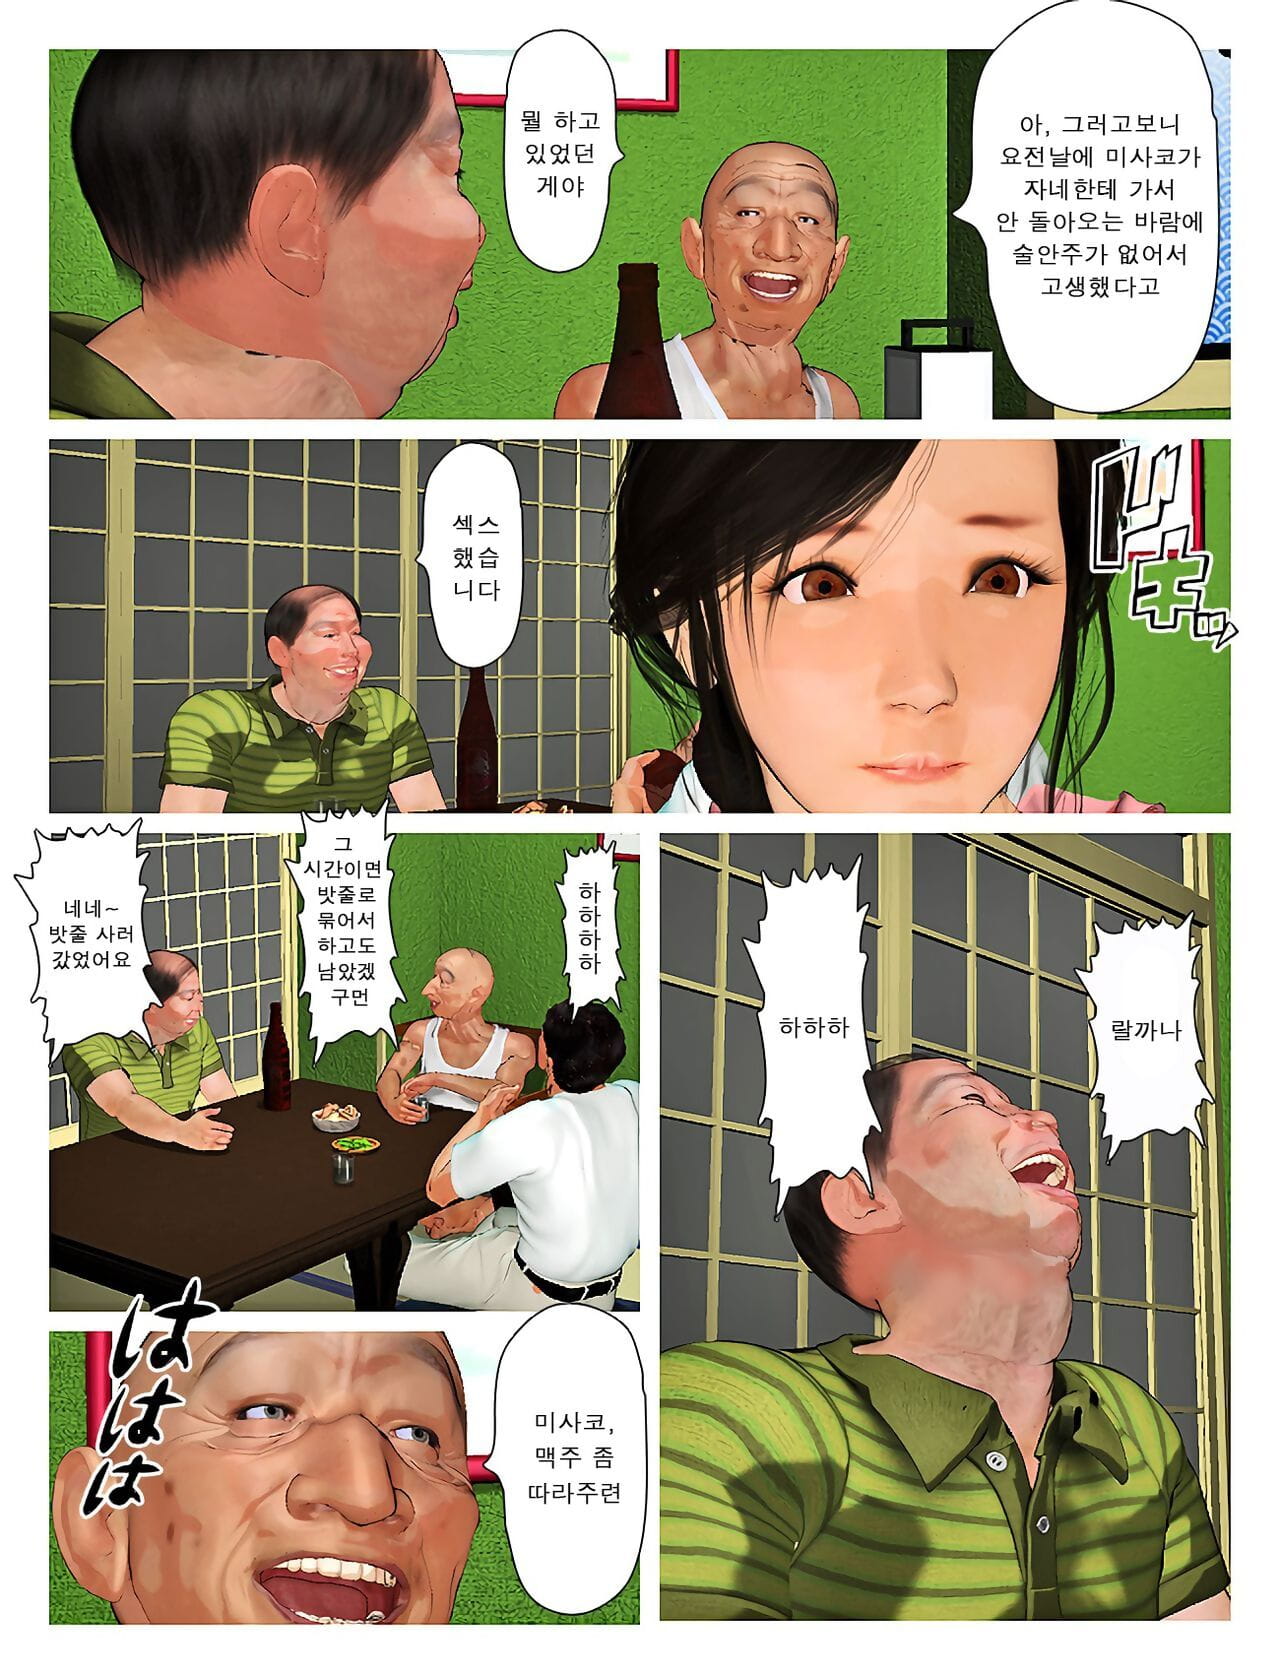 Kyou không misako san 2019:3 오늘의 미사코씨 2019:3 phần 2 page 1